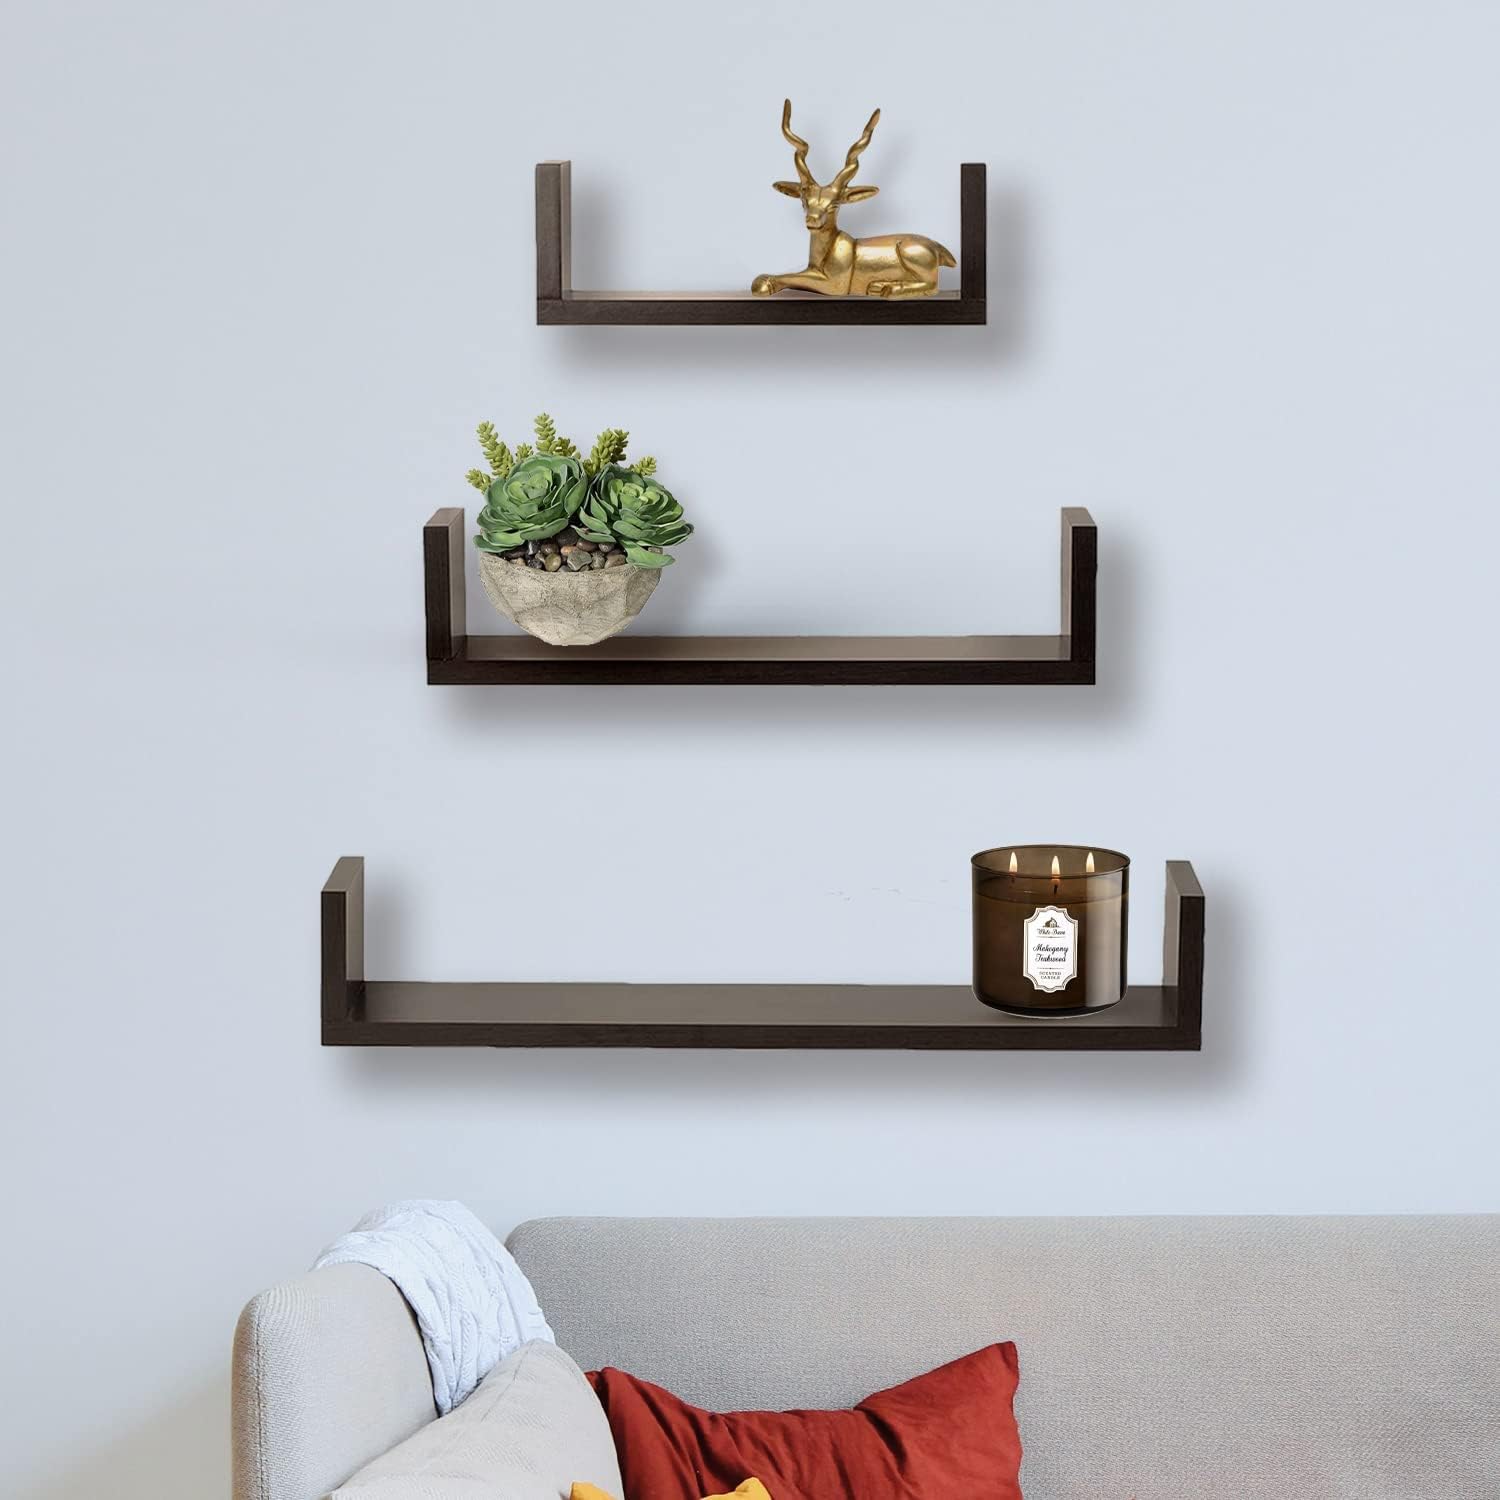 SAVYA HOME U-Shaped Wooden Hanging Shelves-Set of 3, Black Colour